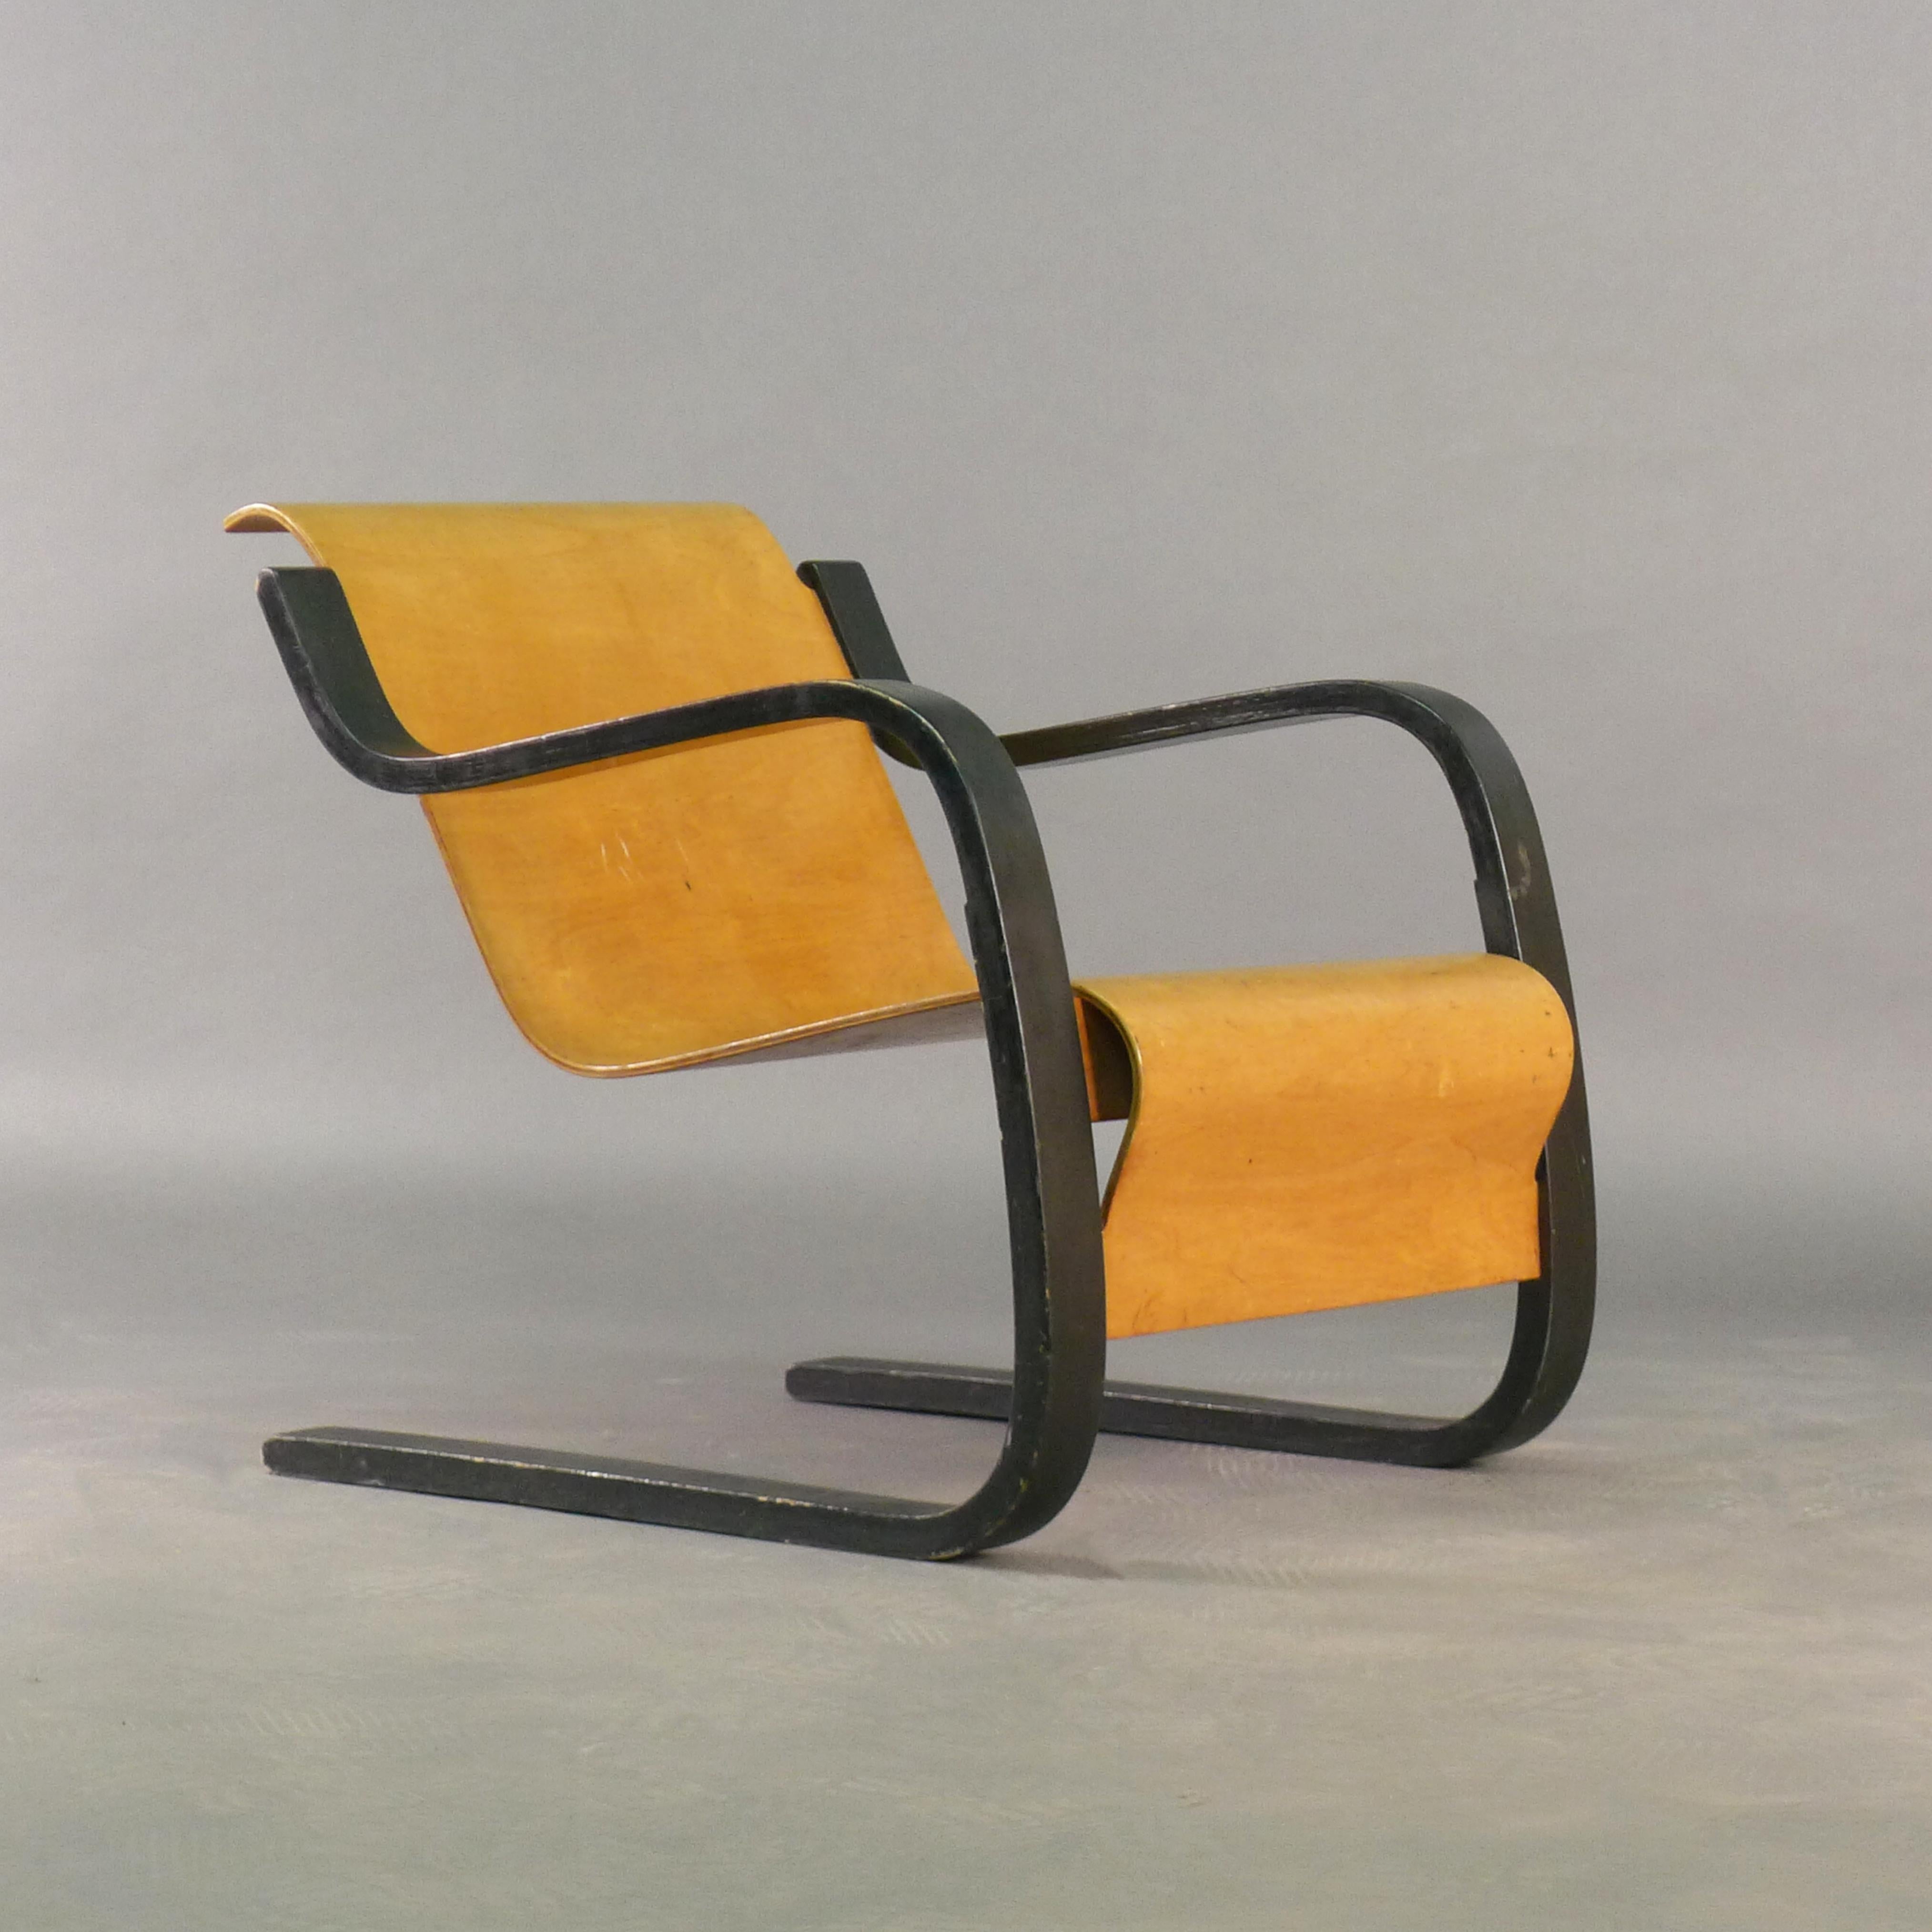 Freitragender Stuhl Alvar Aalto aus Birkenholz und Sperrholz, Modell 31, Huonekalu-ja, Finnland (Skandinavische Moderne) im Angebot